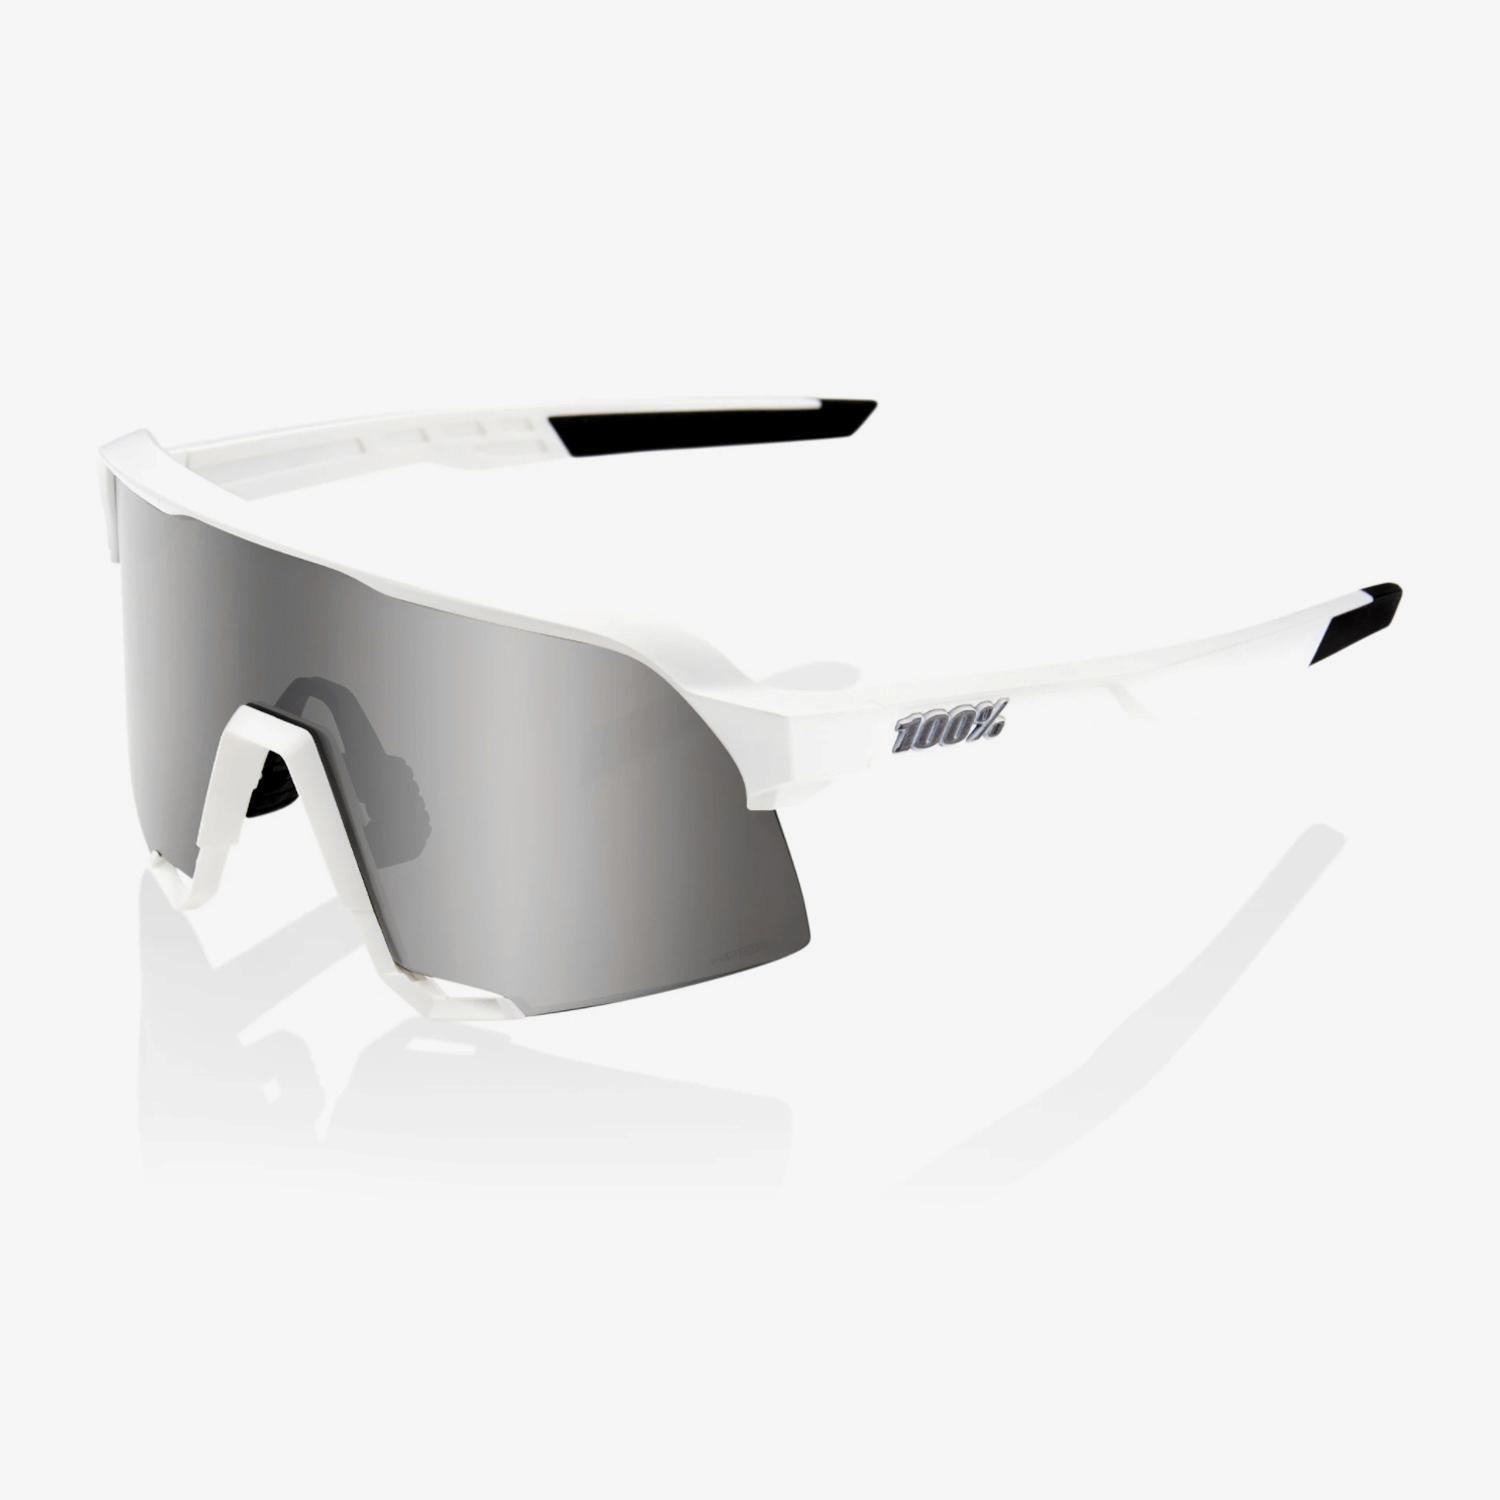 100 Percent s3 - blancas - gafas deportivas talla t.u.